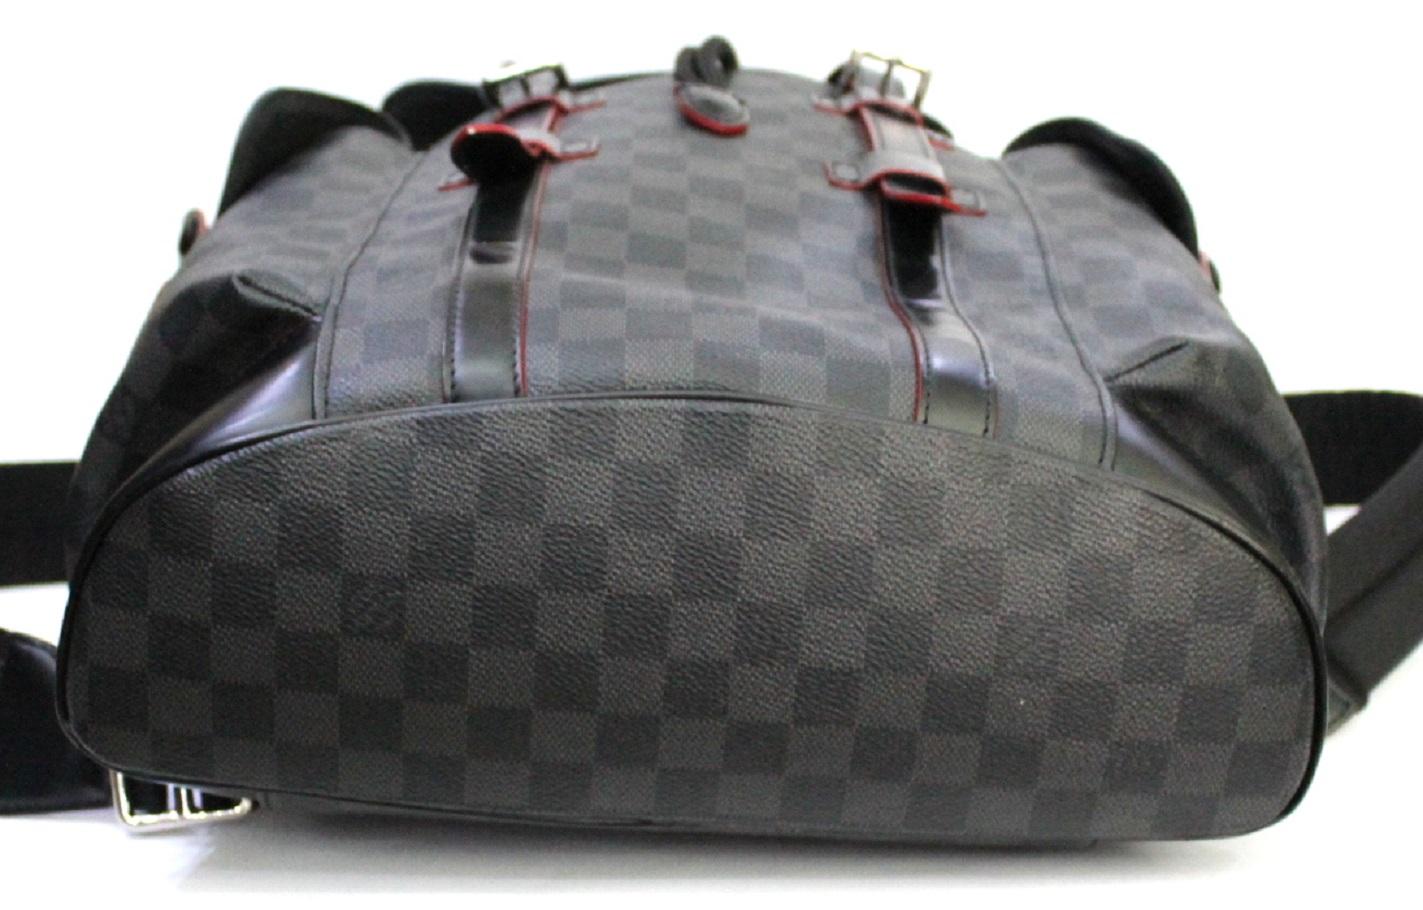 Black 2015 Luois Vuitton Damier Graphite Christopher Backpack Bag